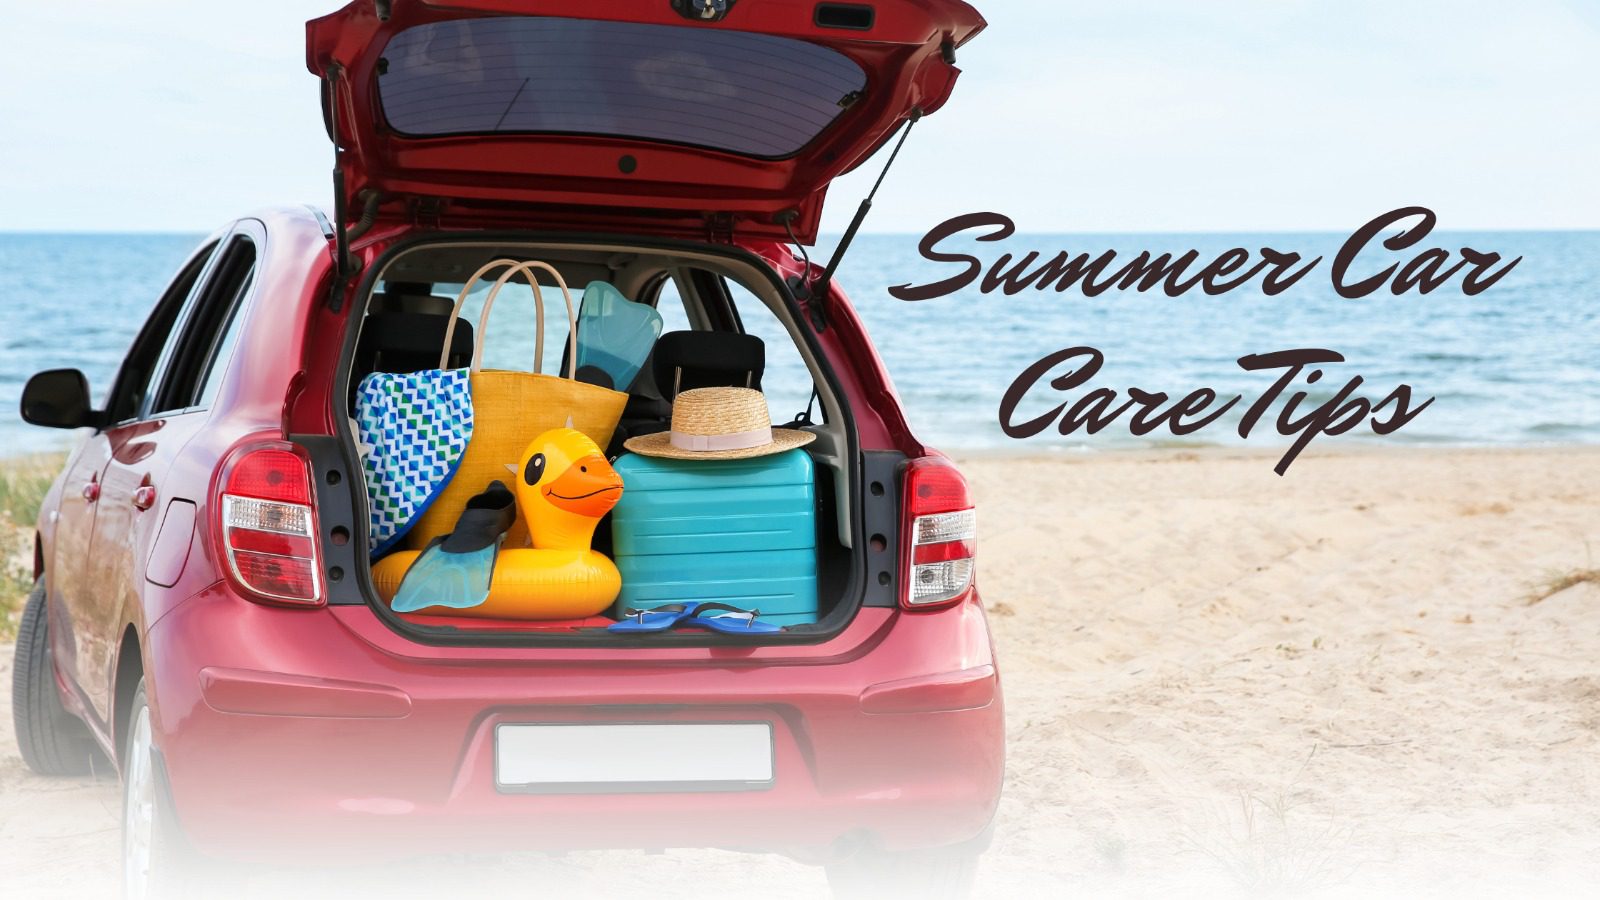 Summer Car Care Tips!